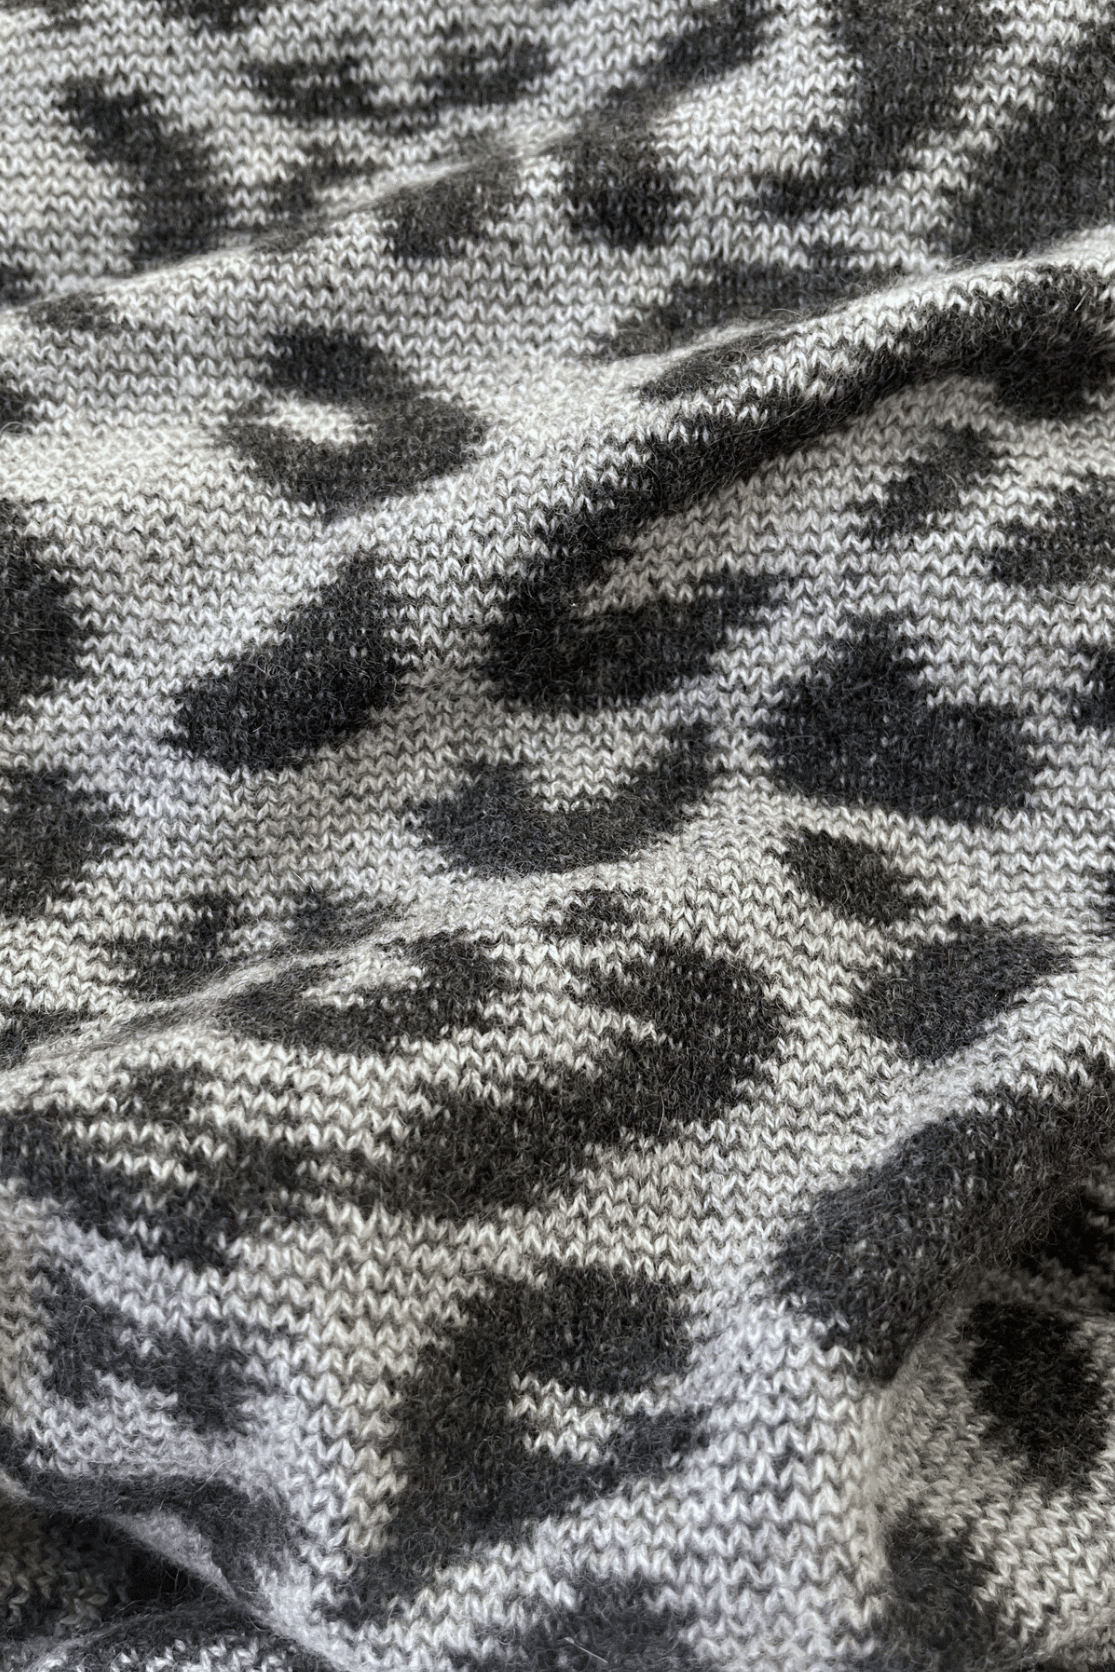 Cashmere Leopard Poncho - Grey